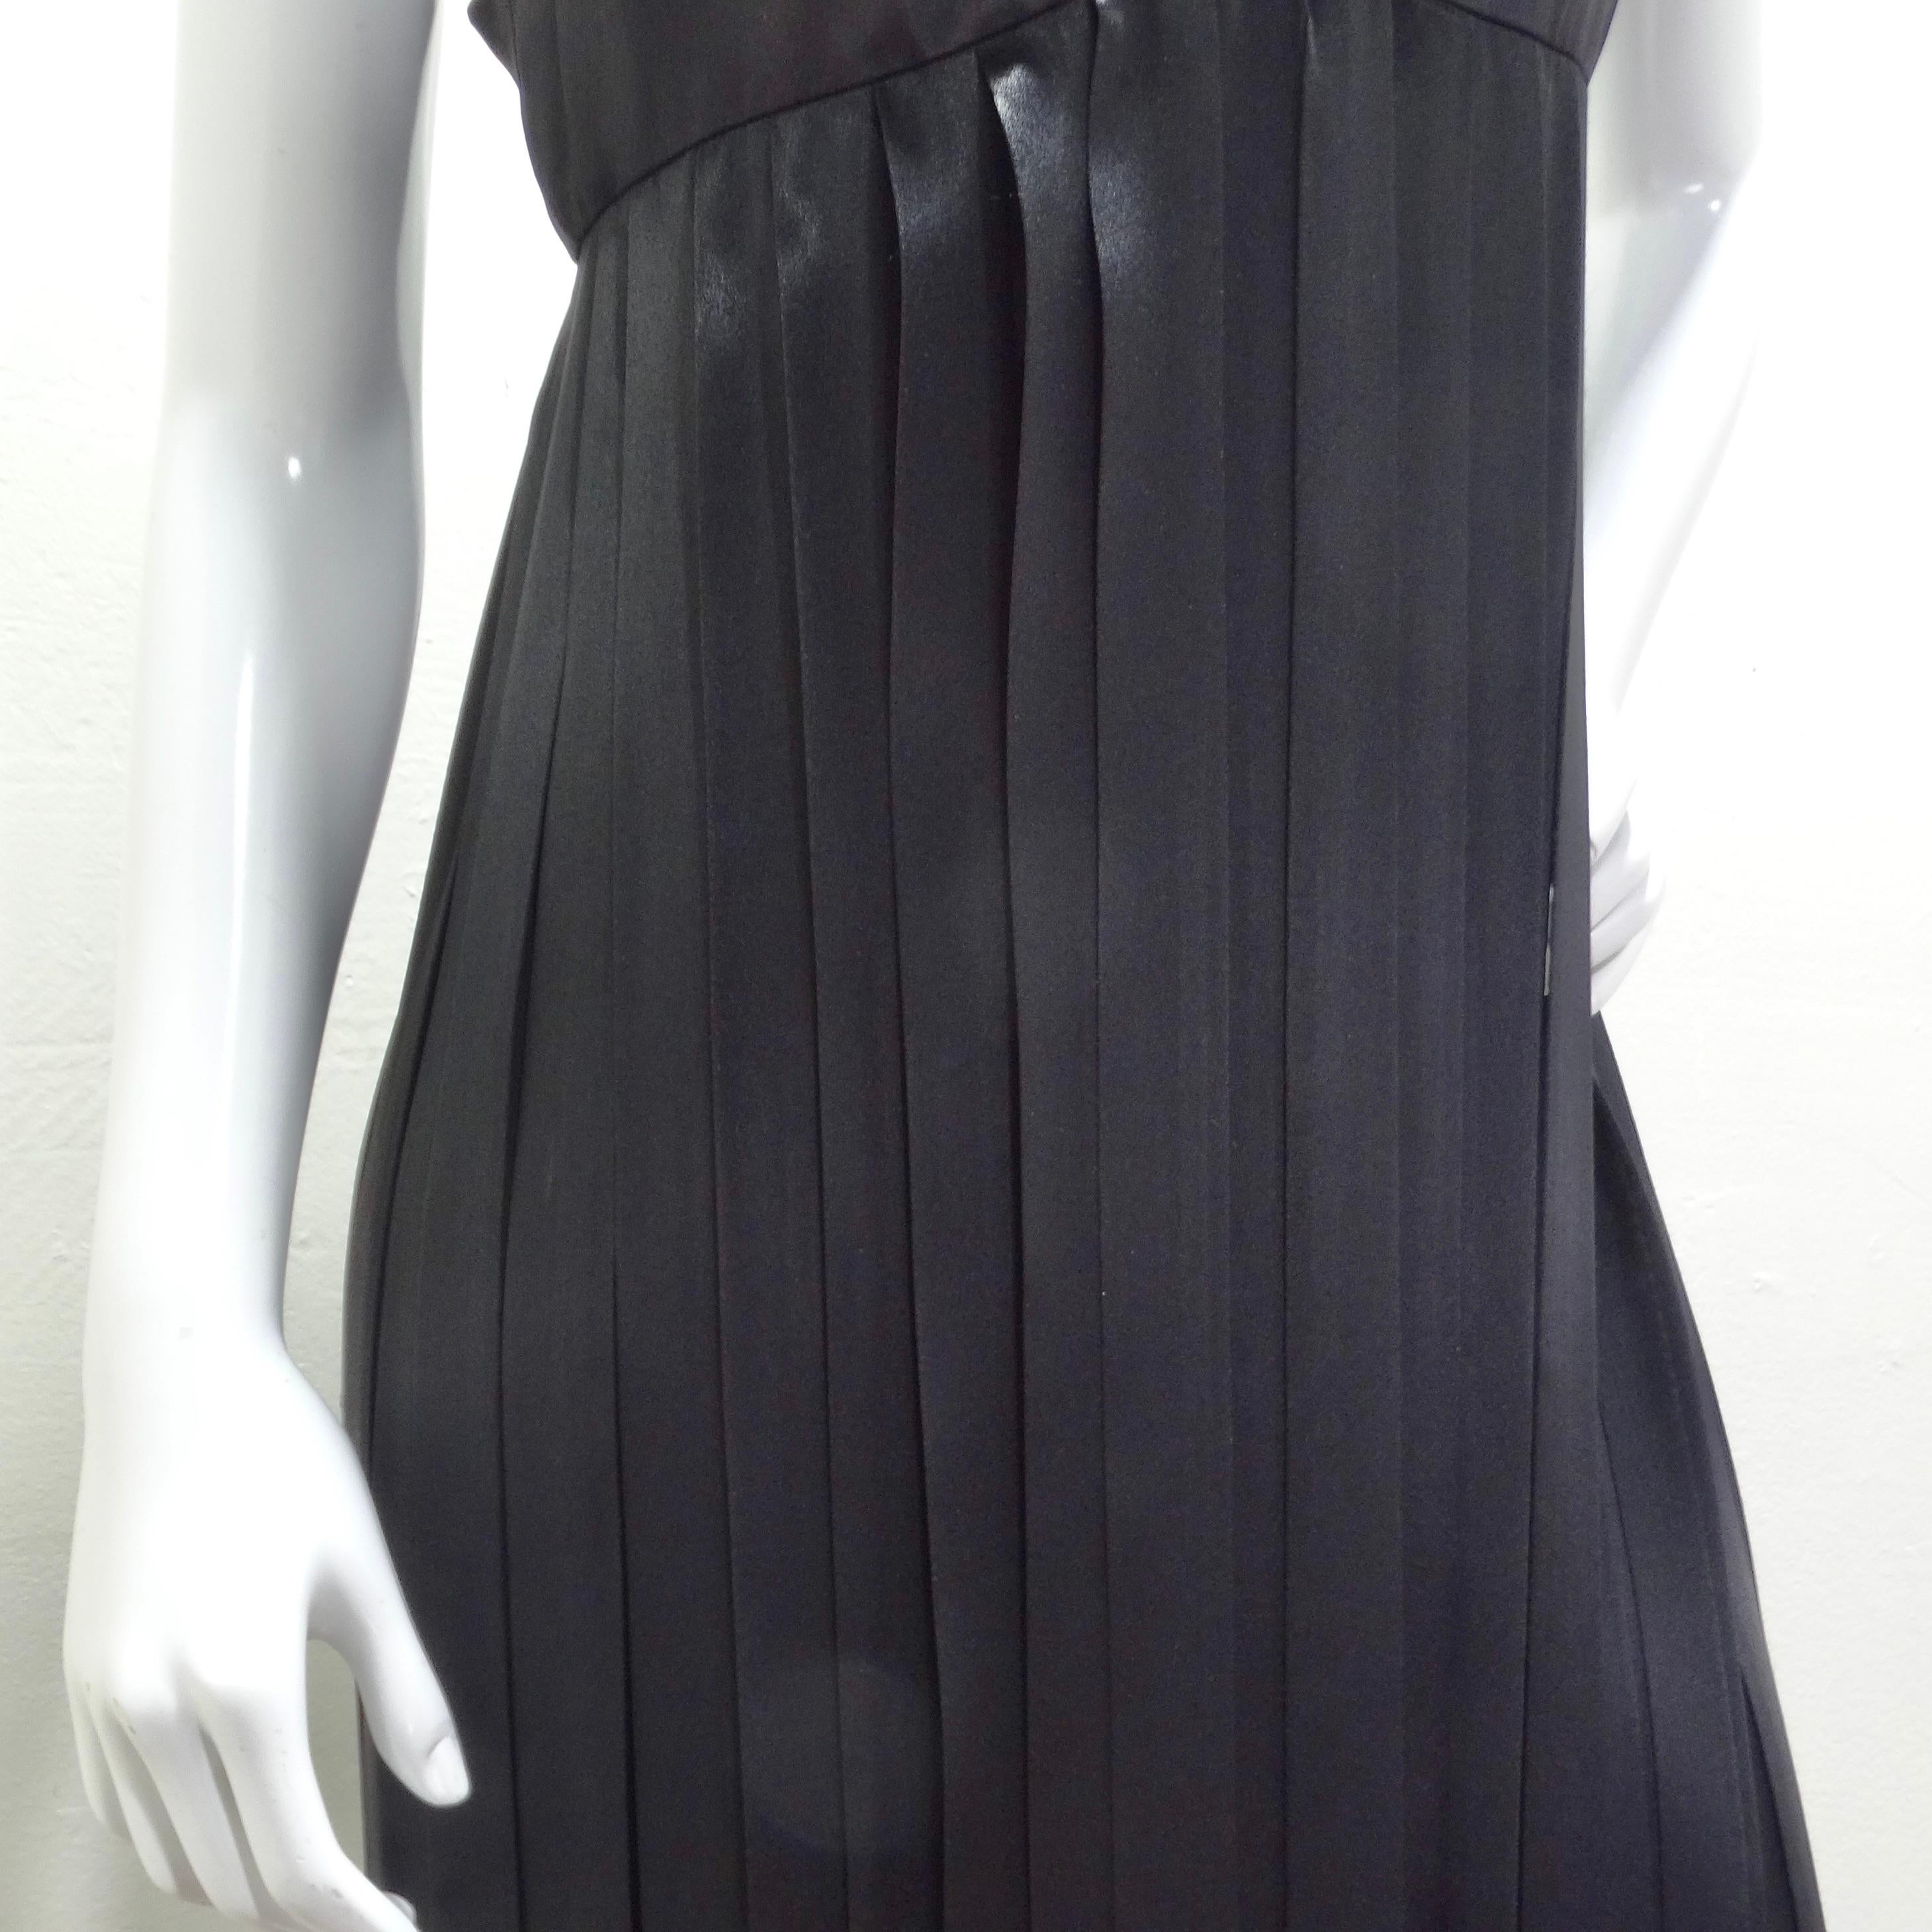 Lillie Rubin 1960s Black Carwash Maxi Dress 1